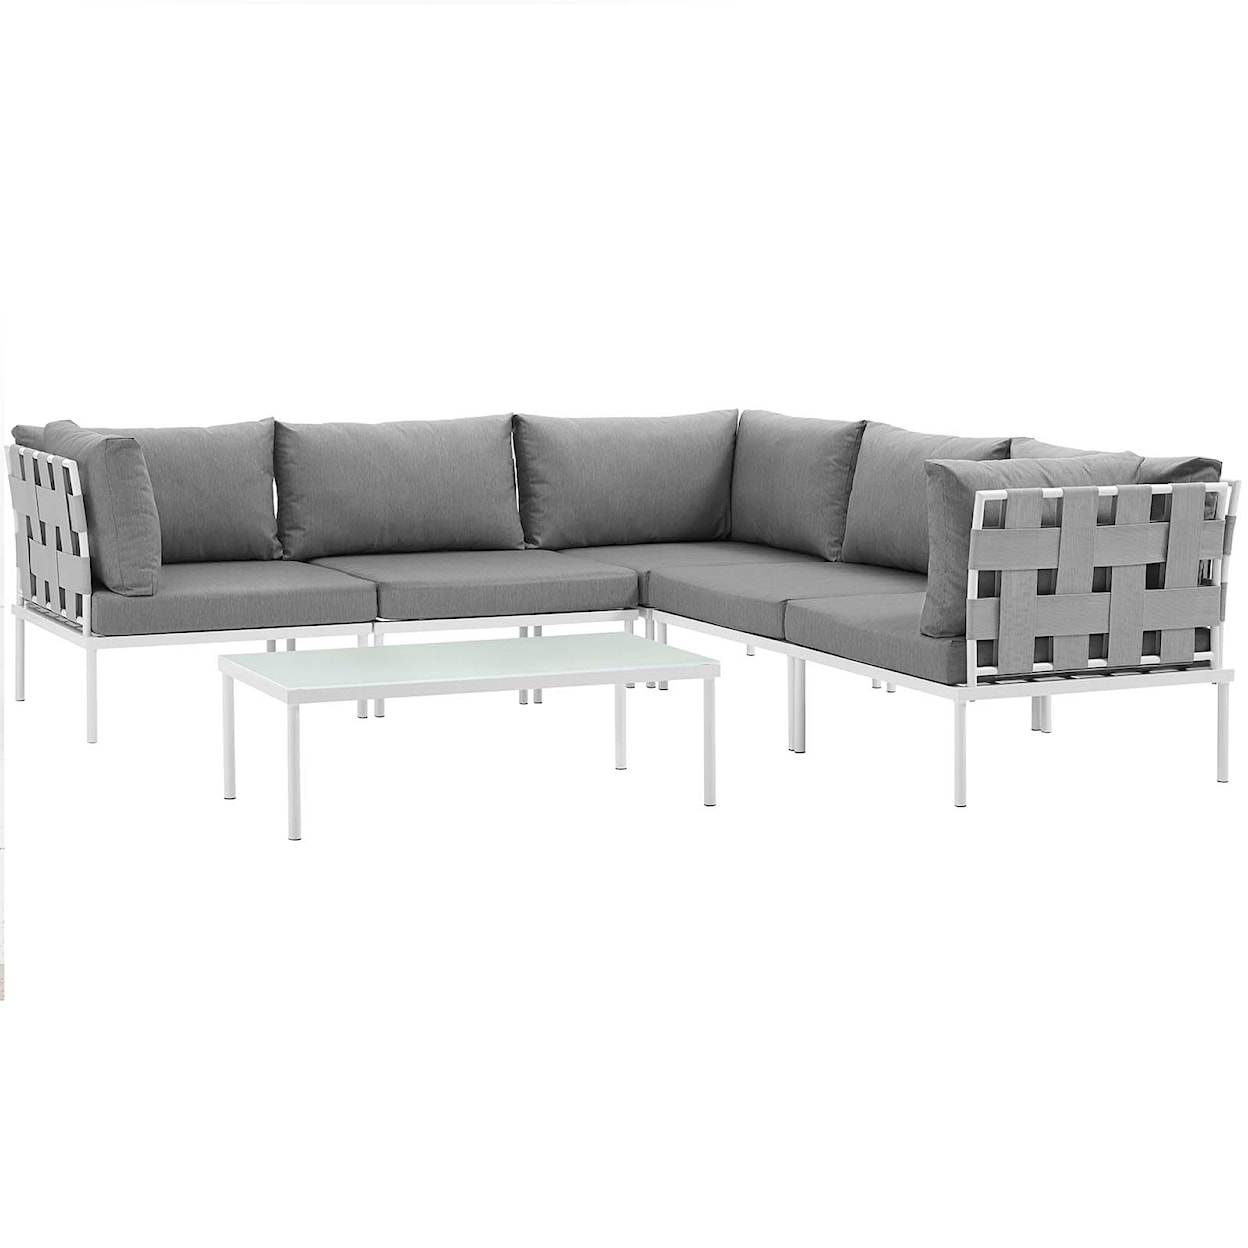 Modway Harmony Outdoor 6 Piece Sectional Sofa Set